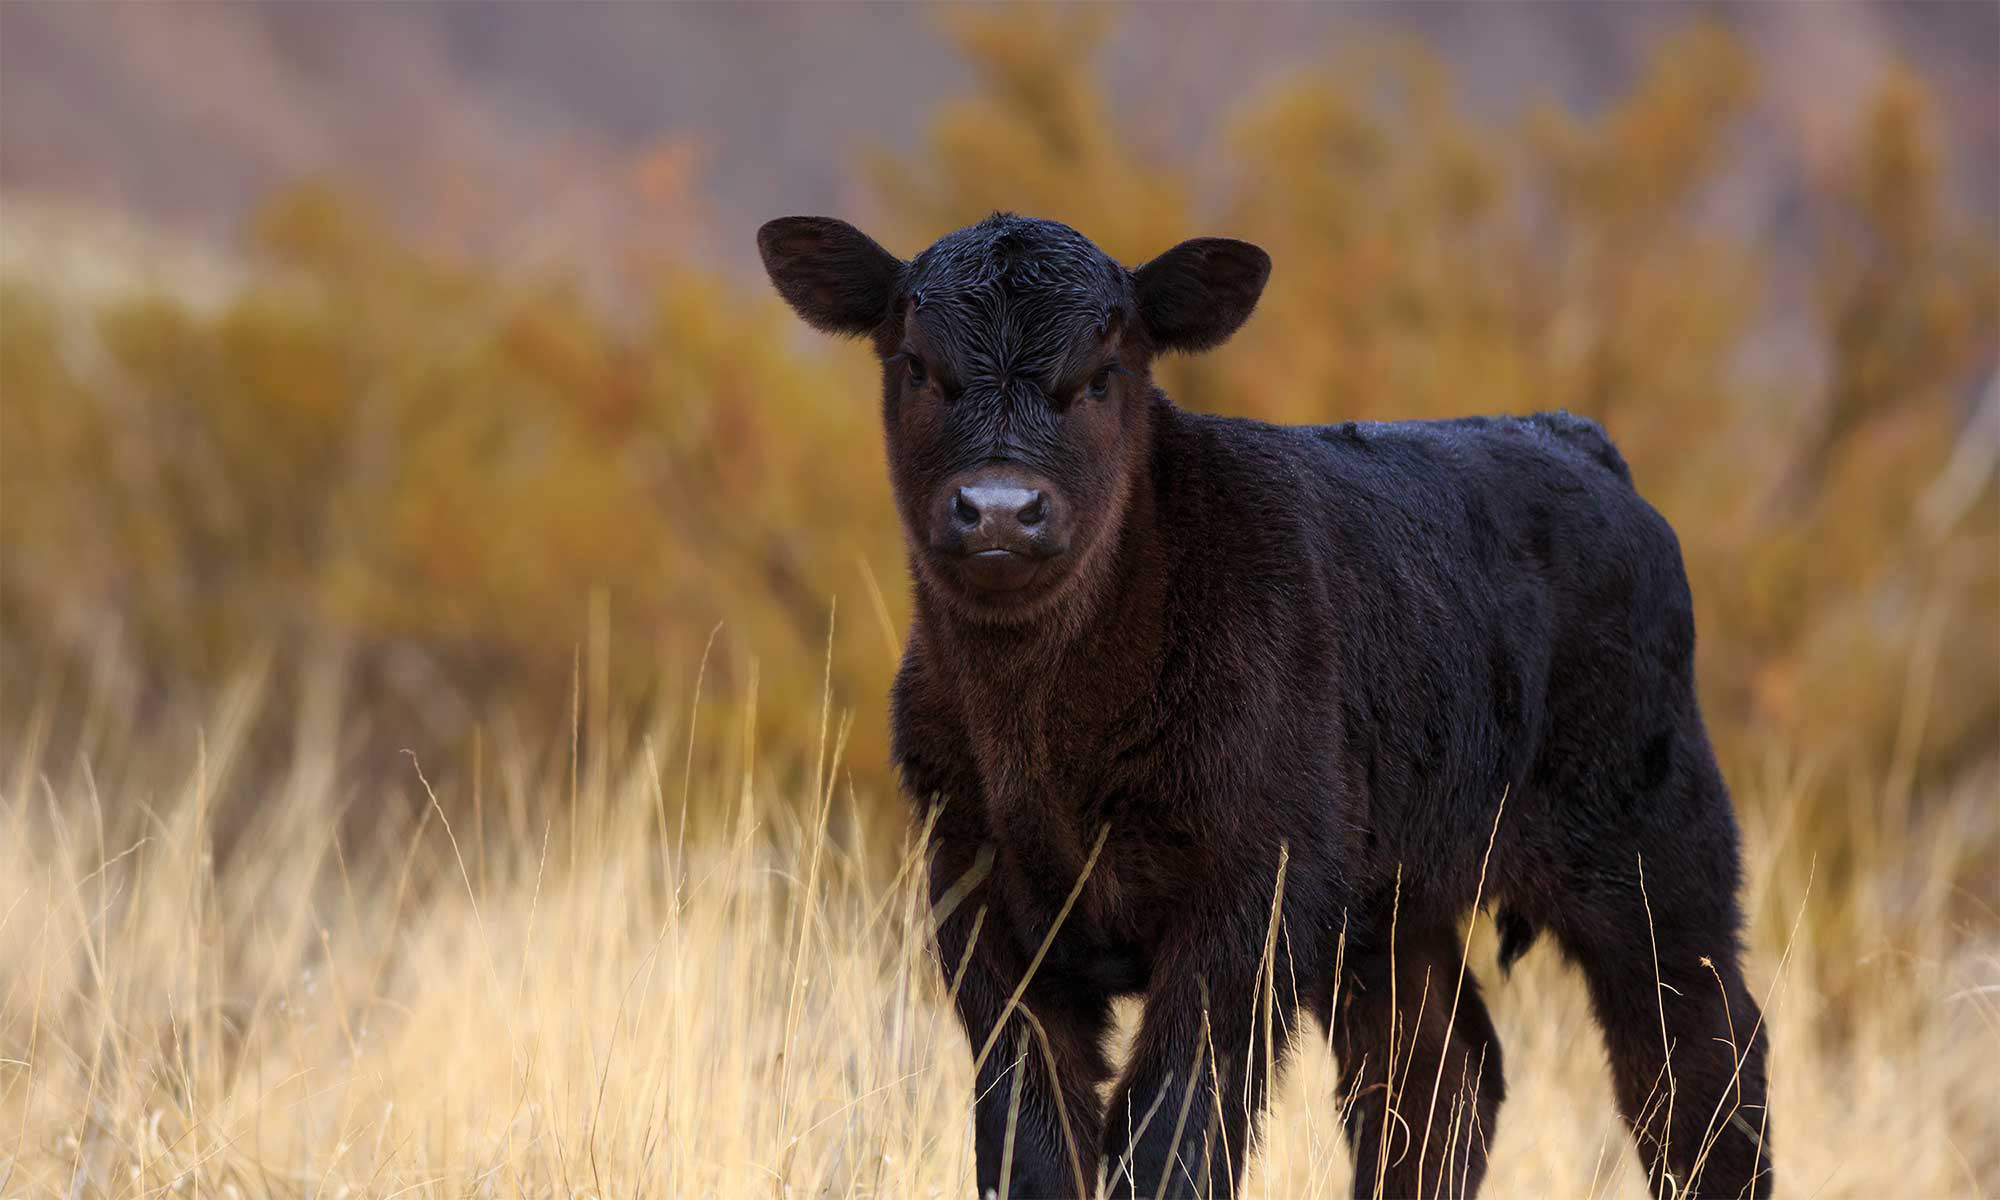 Calf in tall grass